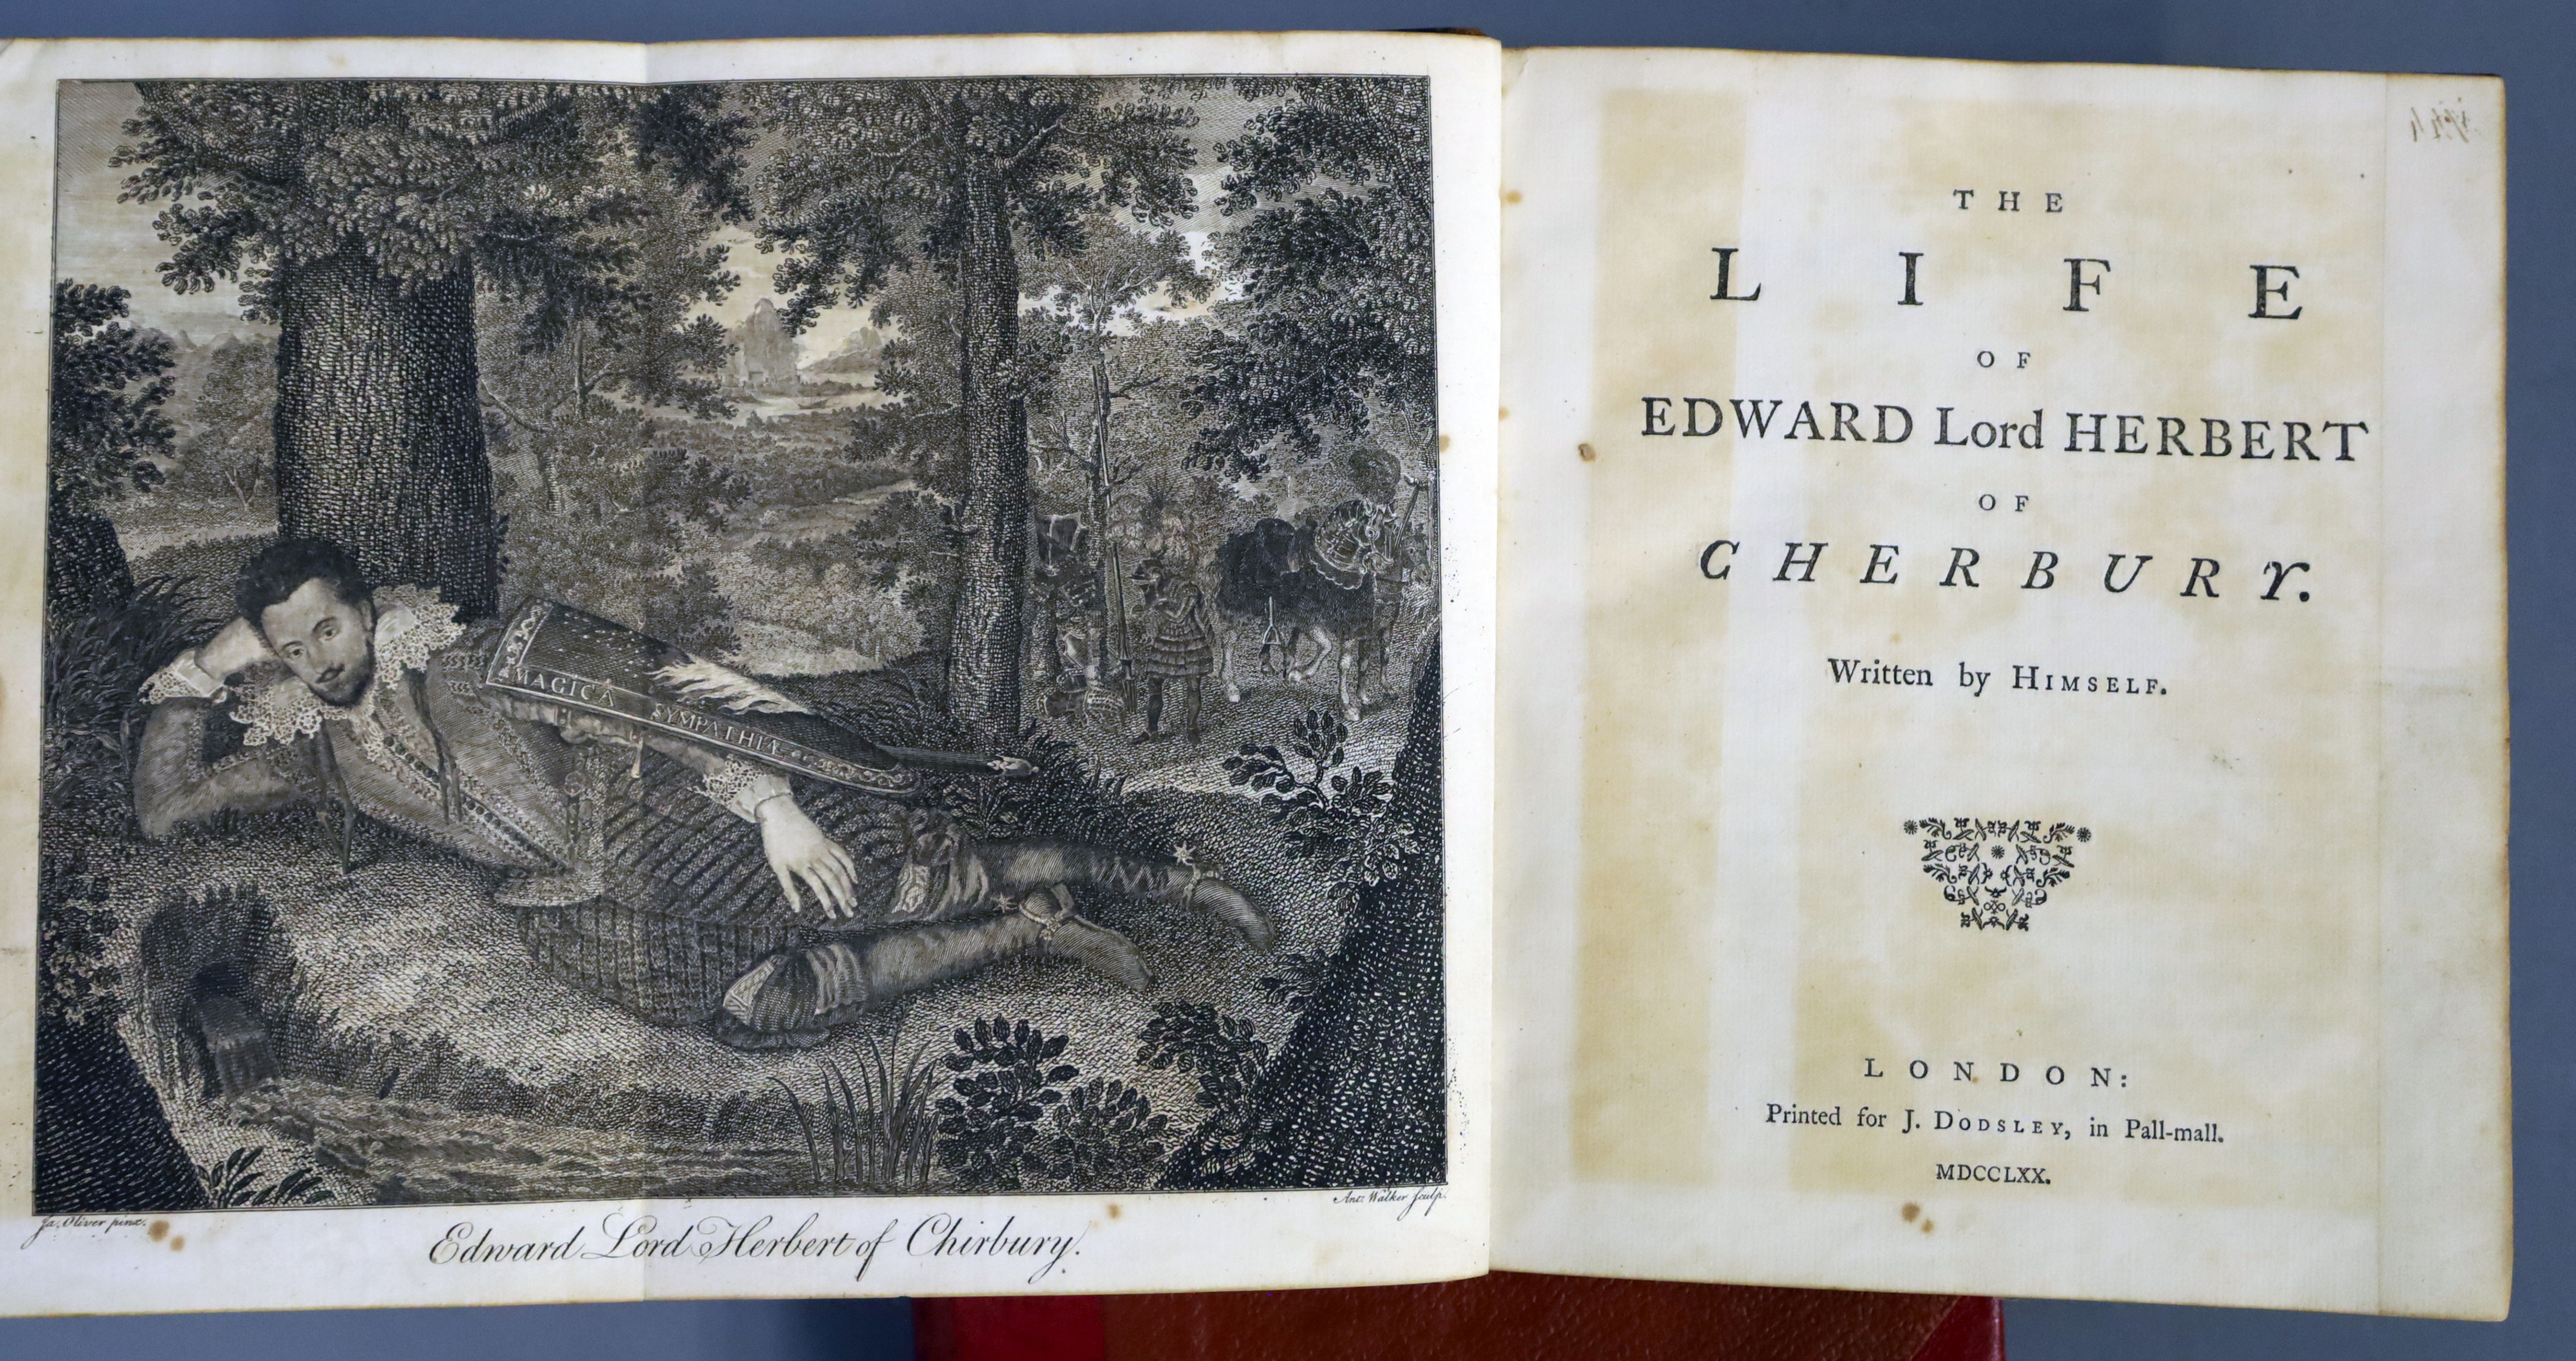 Herbert of Cherbury, Edward Lord - The Life of Edward Lord Herbert of Cherbury, written by